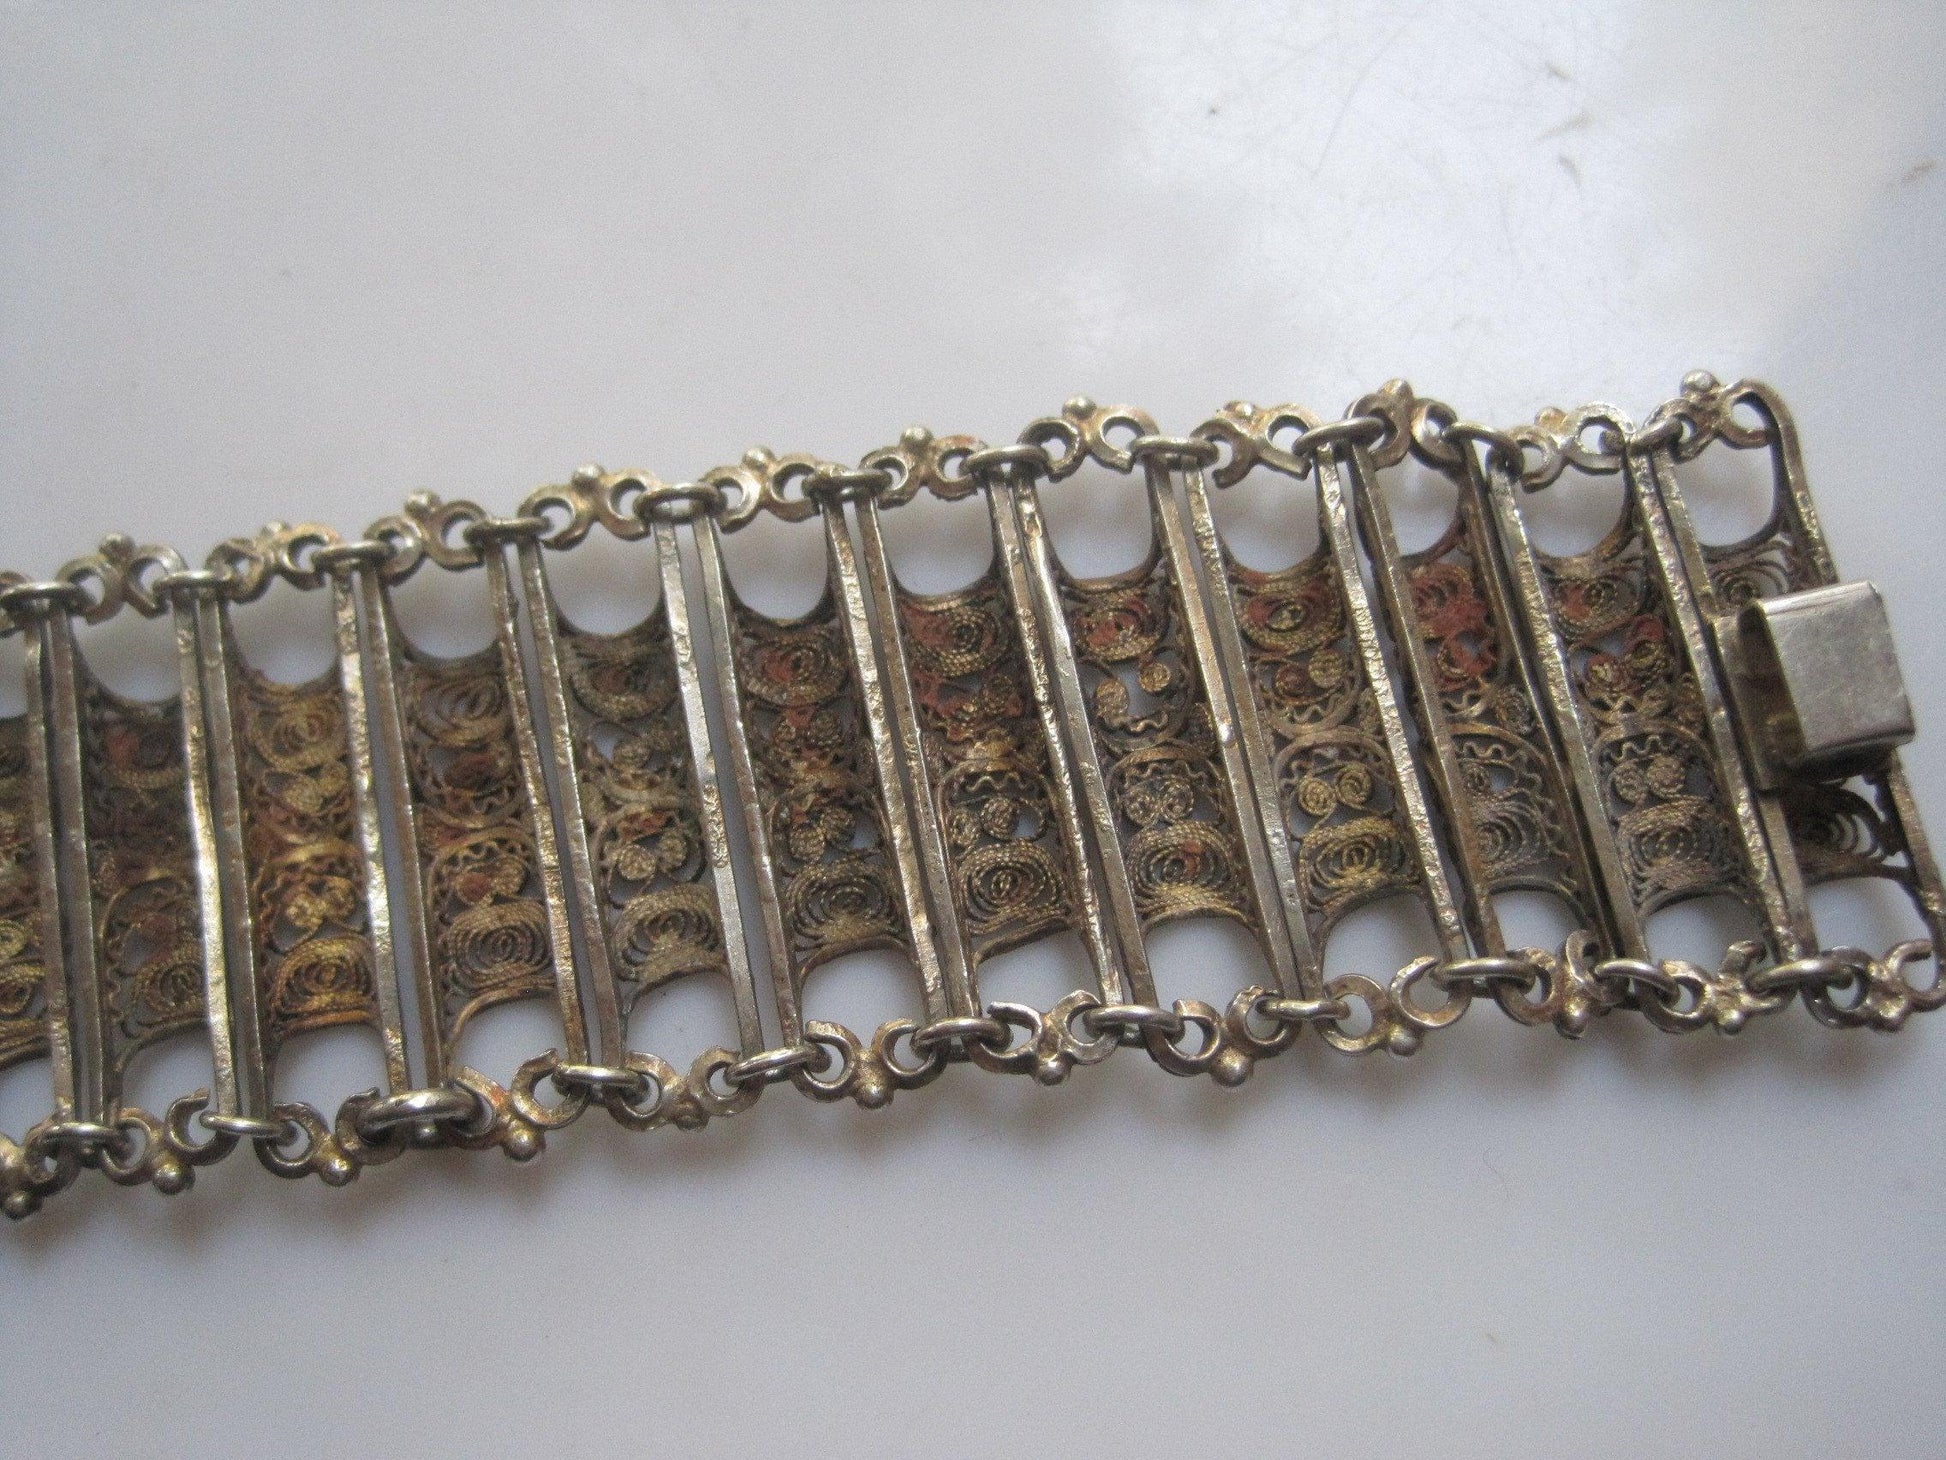 Silver filigree jewelry